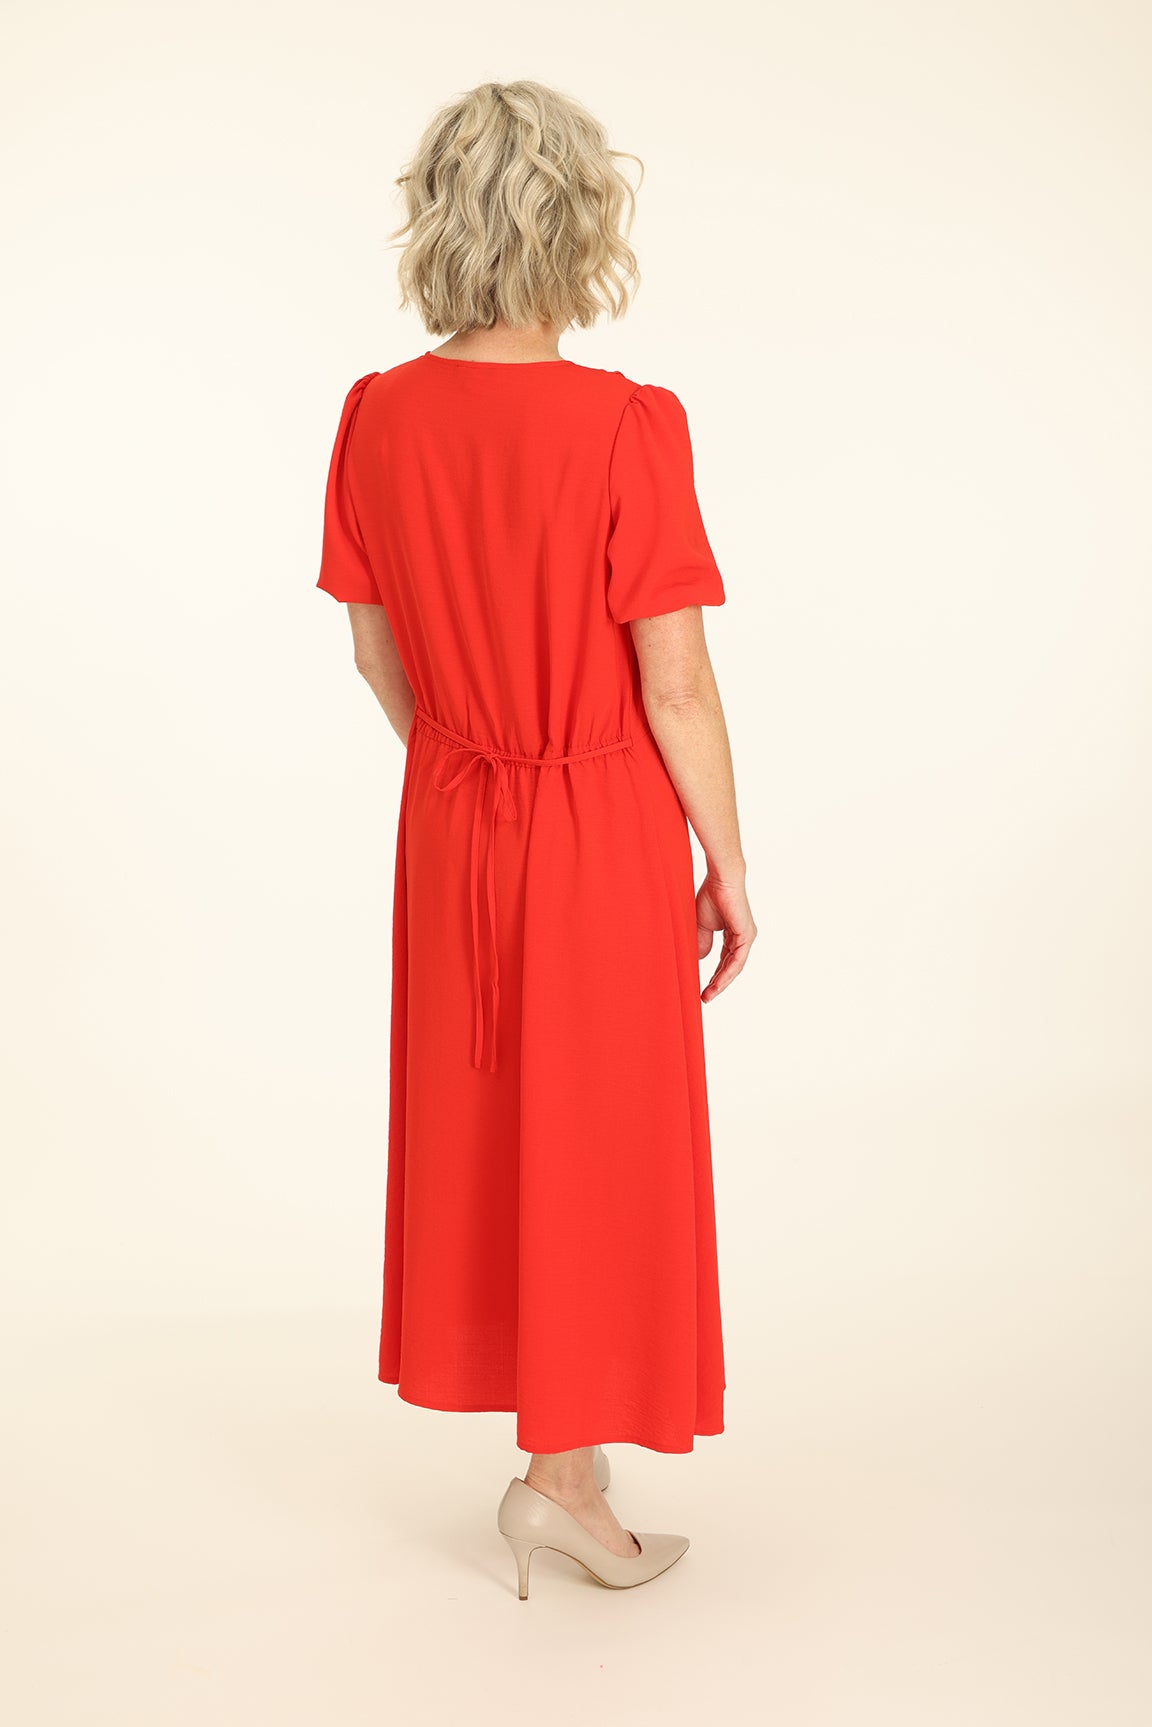 Soft Drape Dress in Red | Caroline Eve